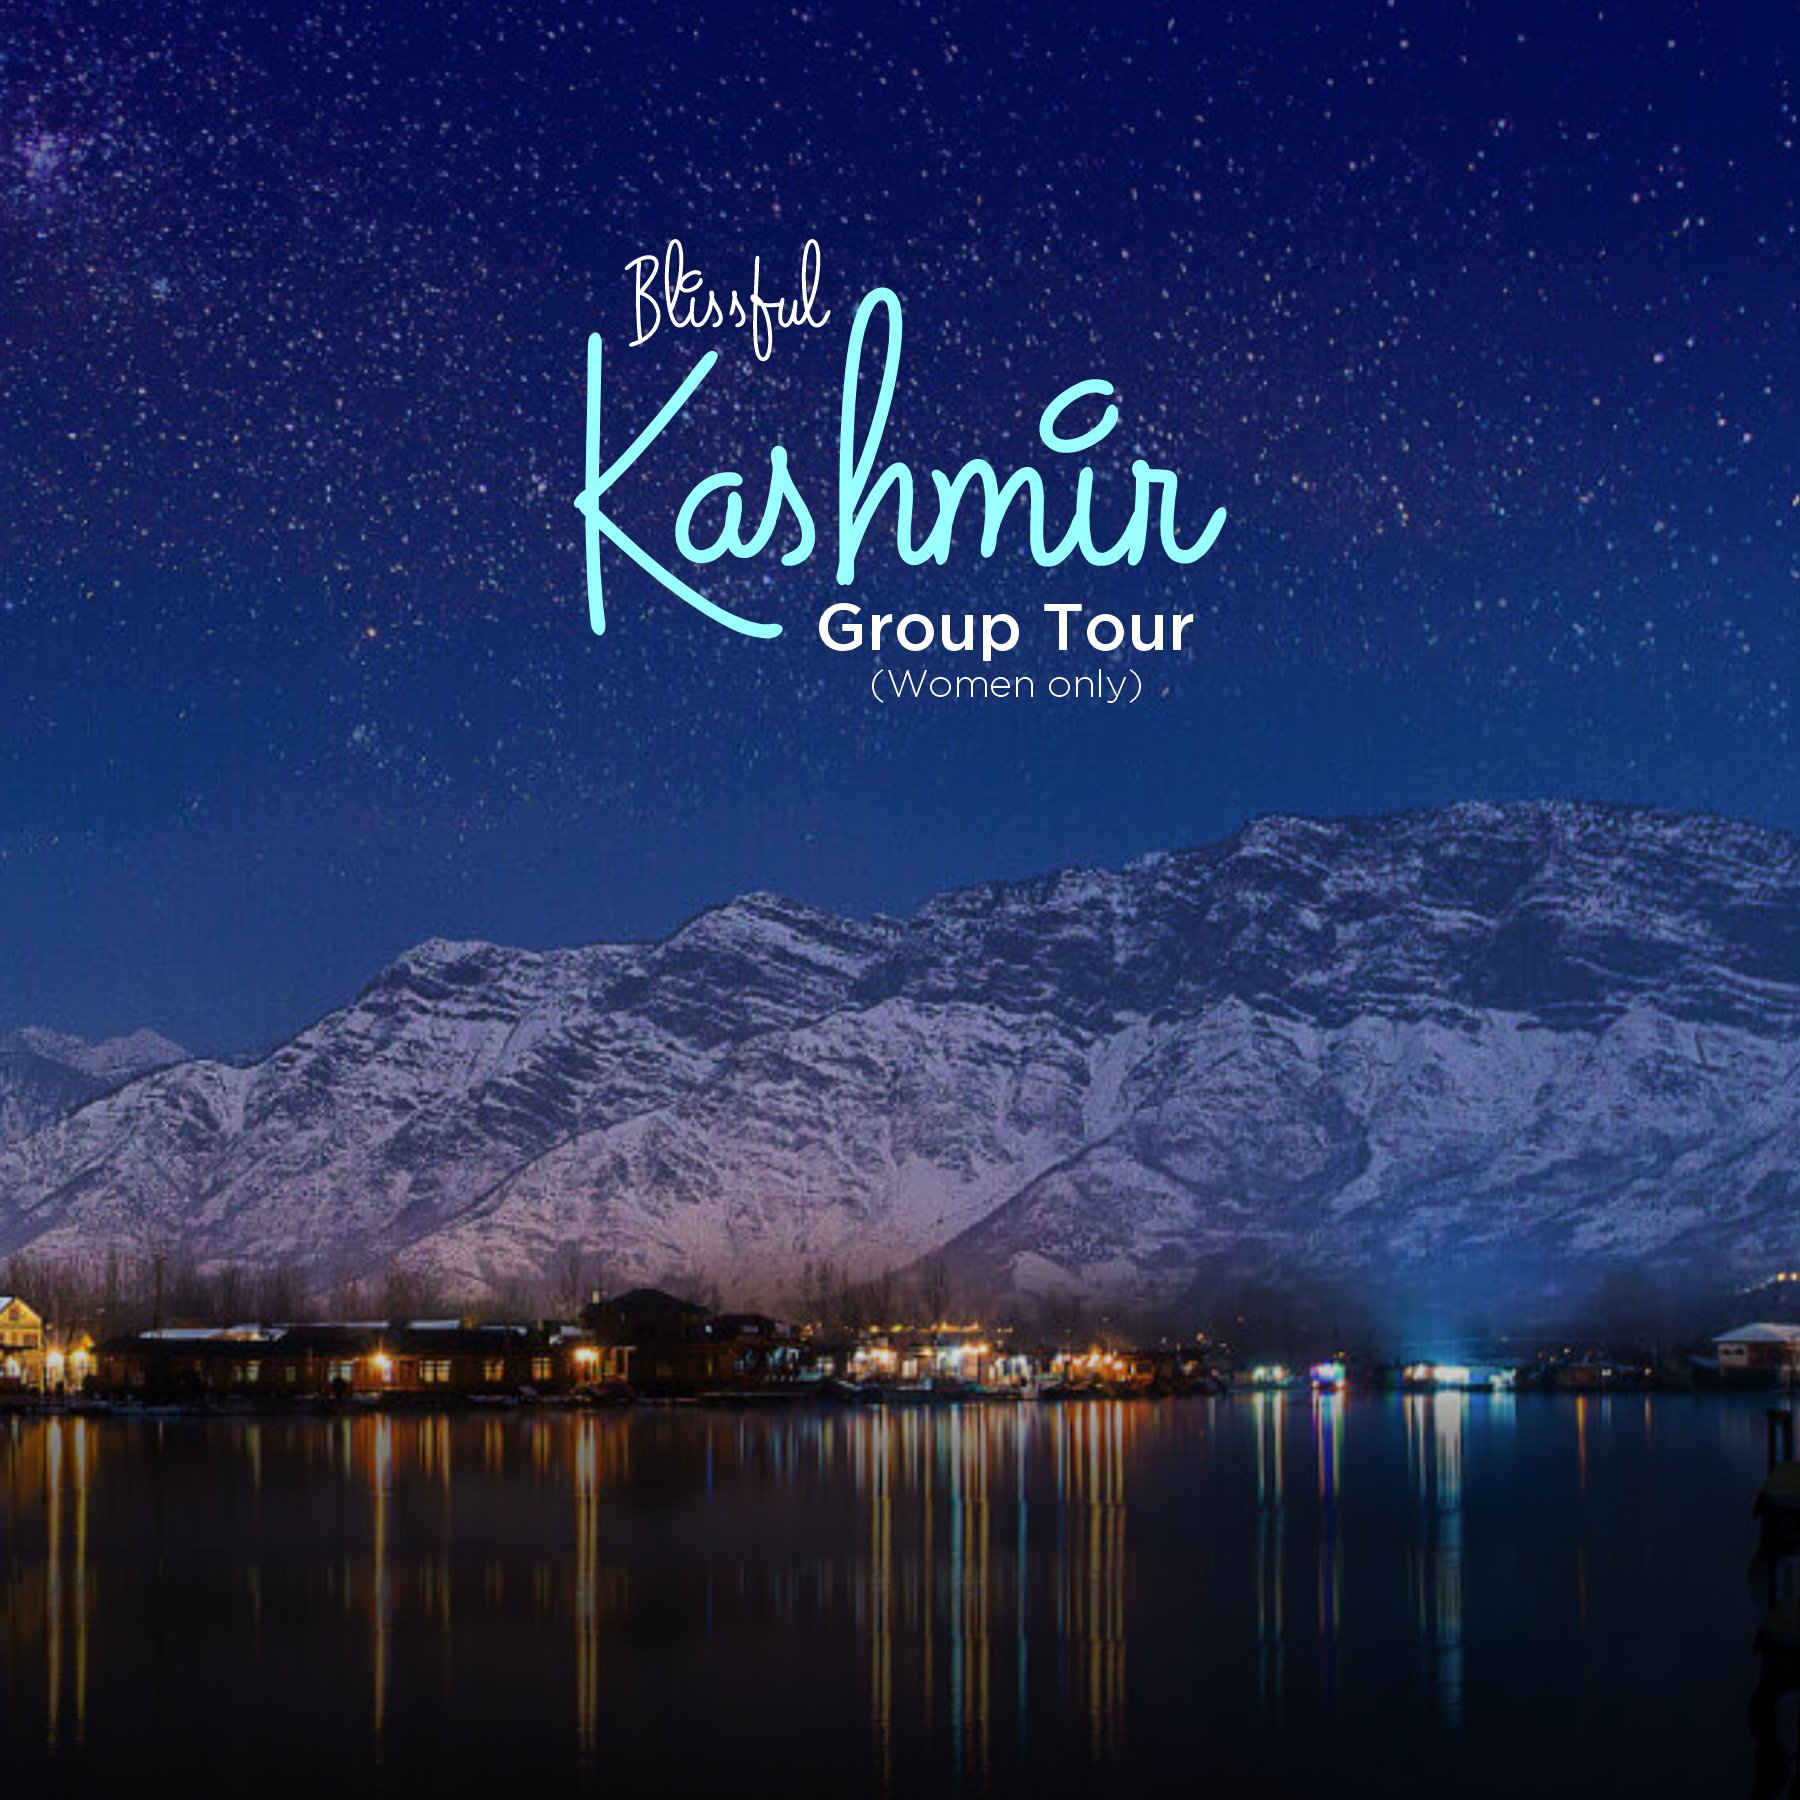 Blisfull kashmir group tour (Women's Only), Srinagar, Jammu and Kashmir, India